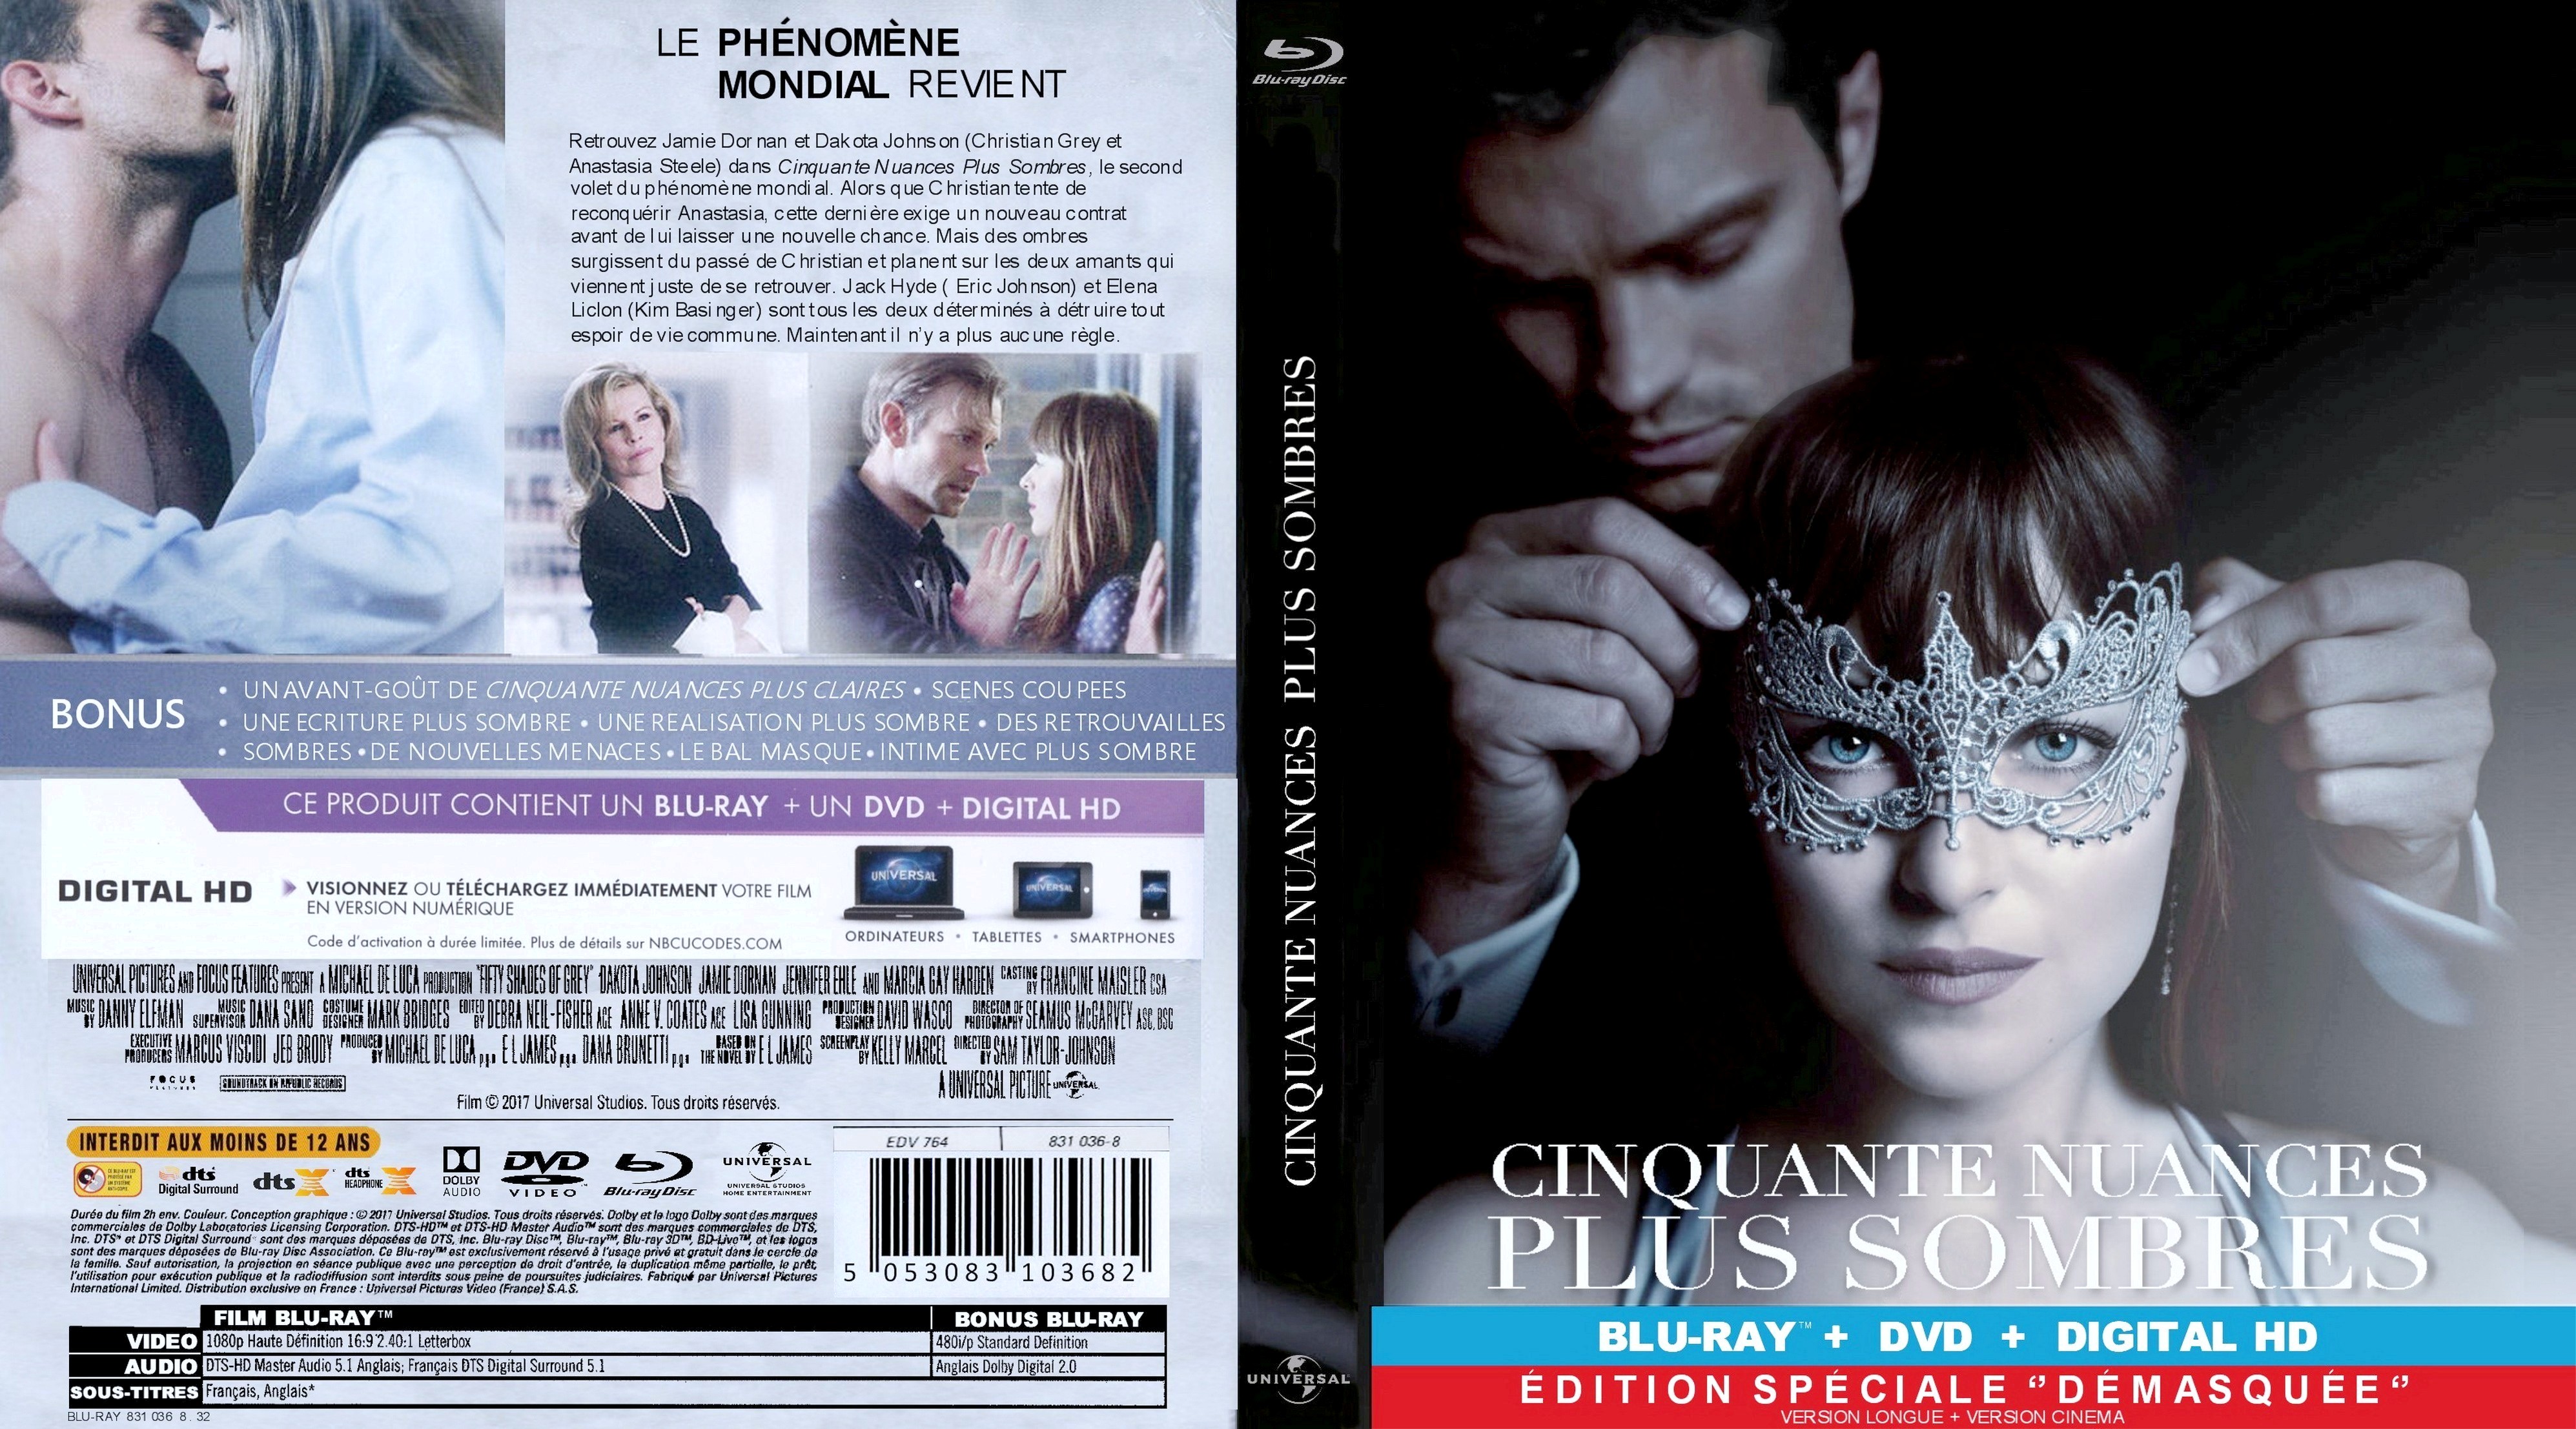 Jaquette DVD Cinquante Nuances plus sombres custom (BLU-RAY) v2